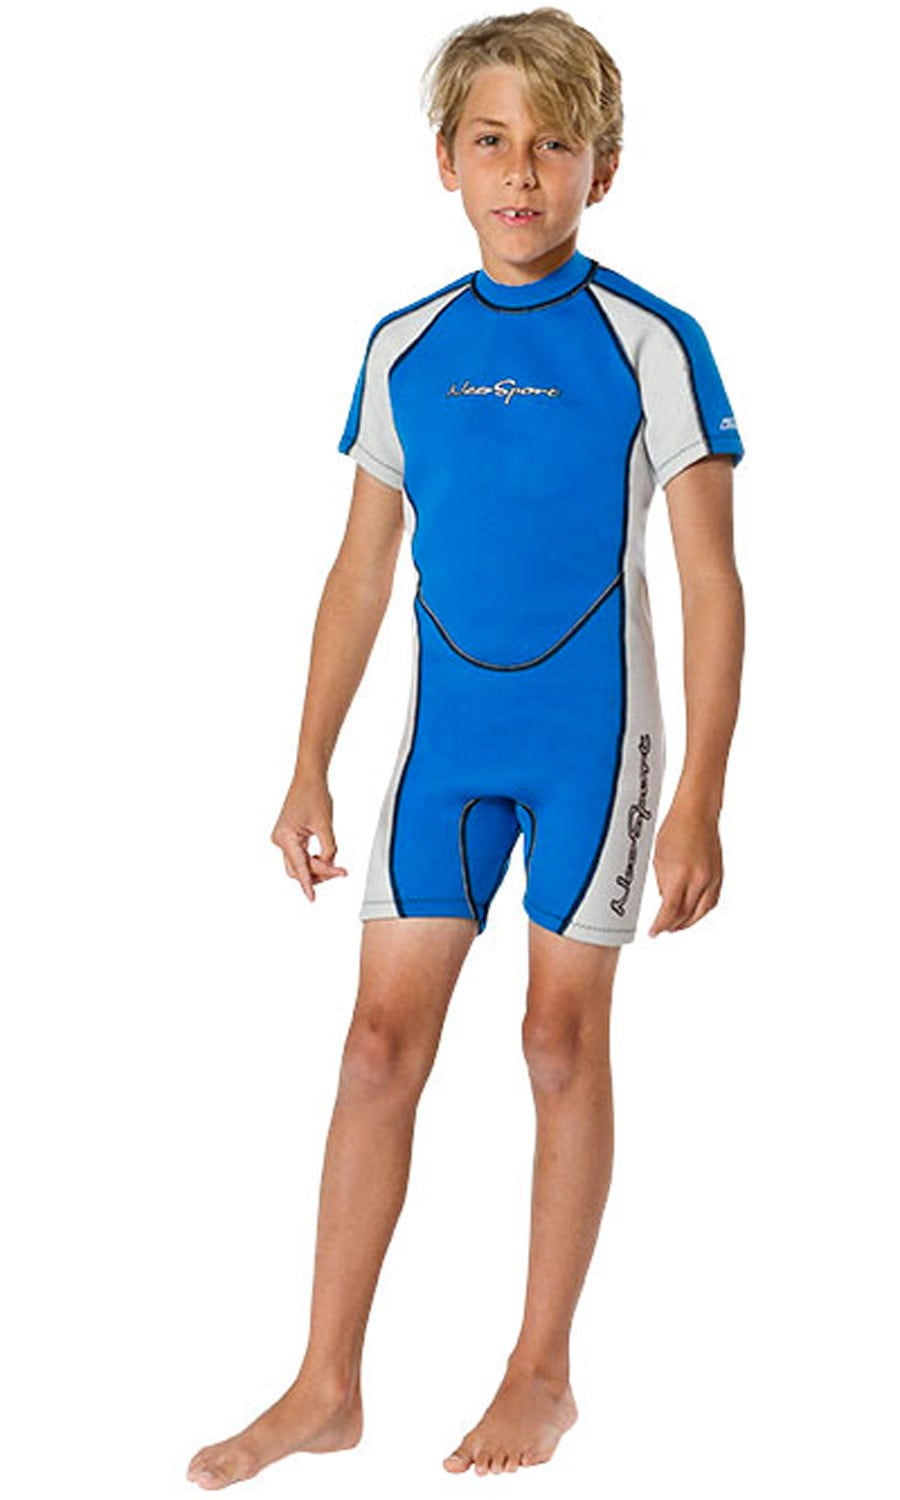 Neosport Youth 2mm Shorty Wetsuit, 6 Blue/Gray - Walmart.com - Walmart.com